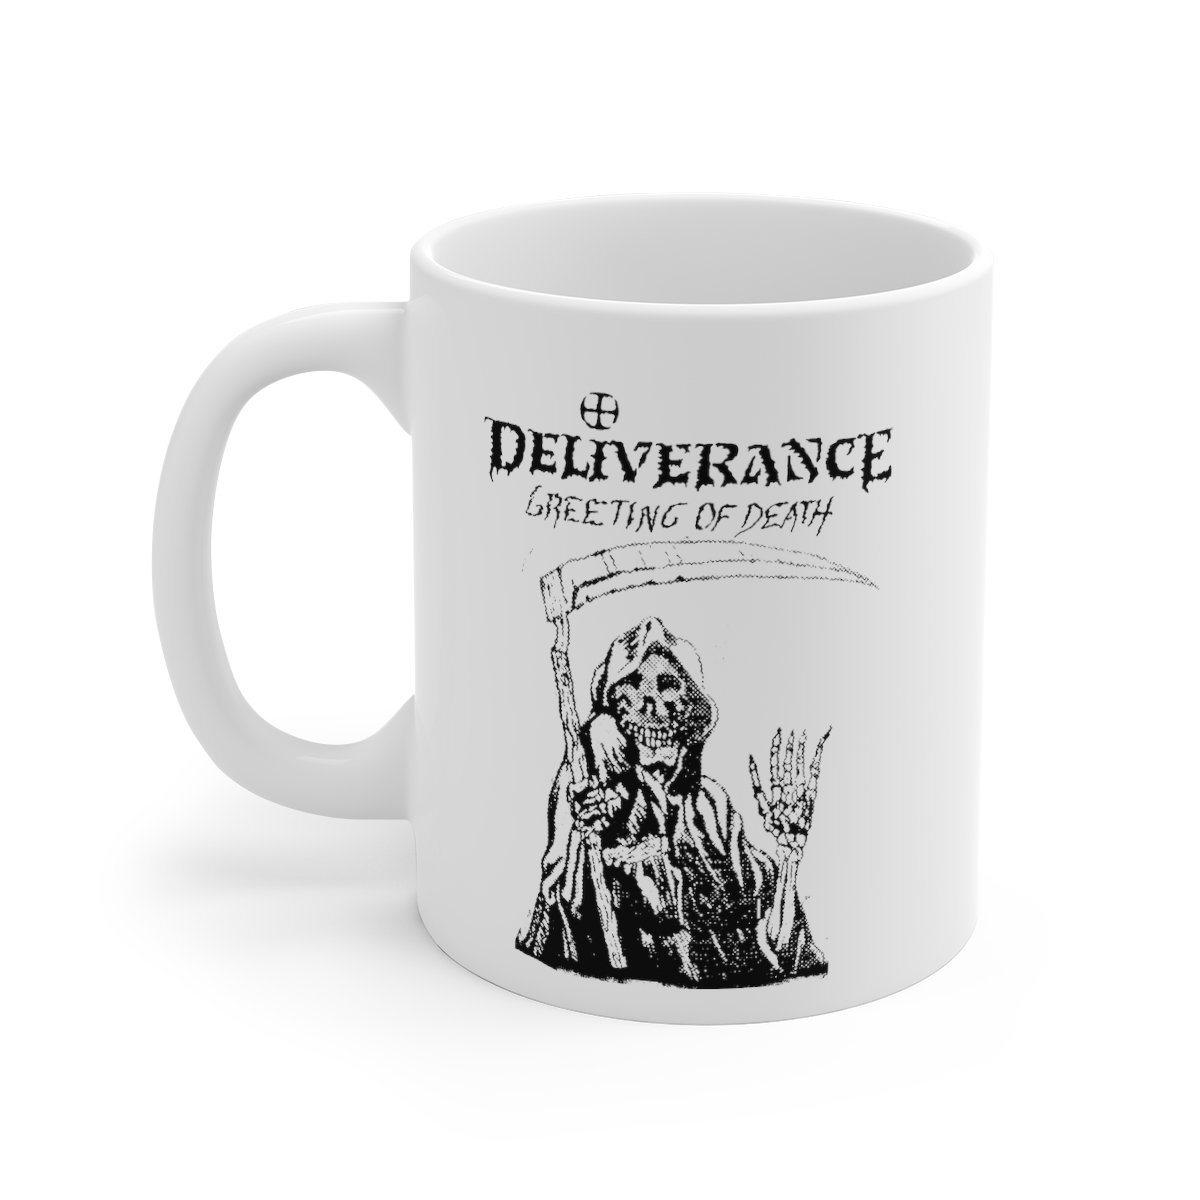 Deliverance – Greetings of Death White mug 11oz